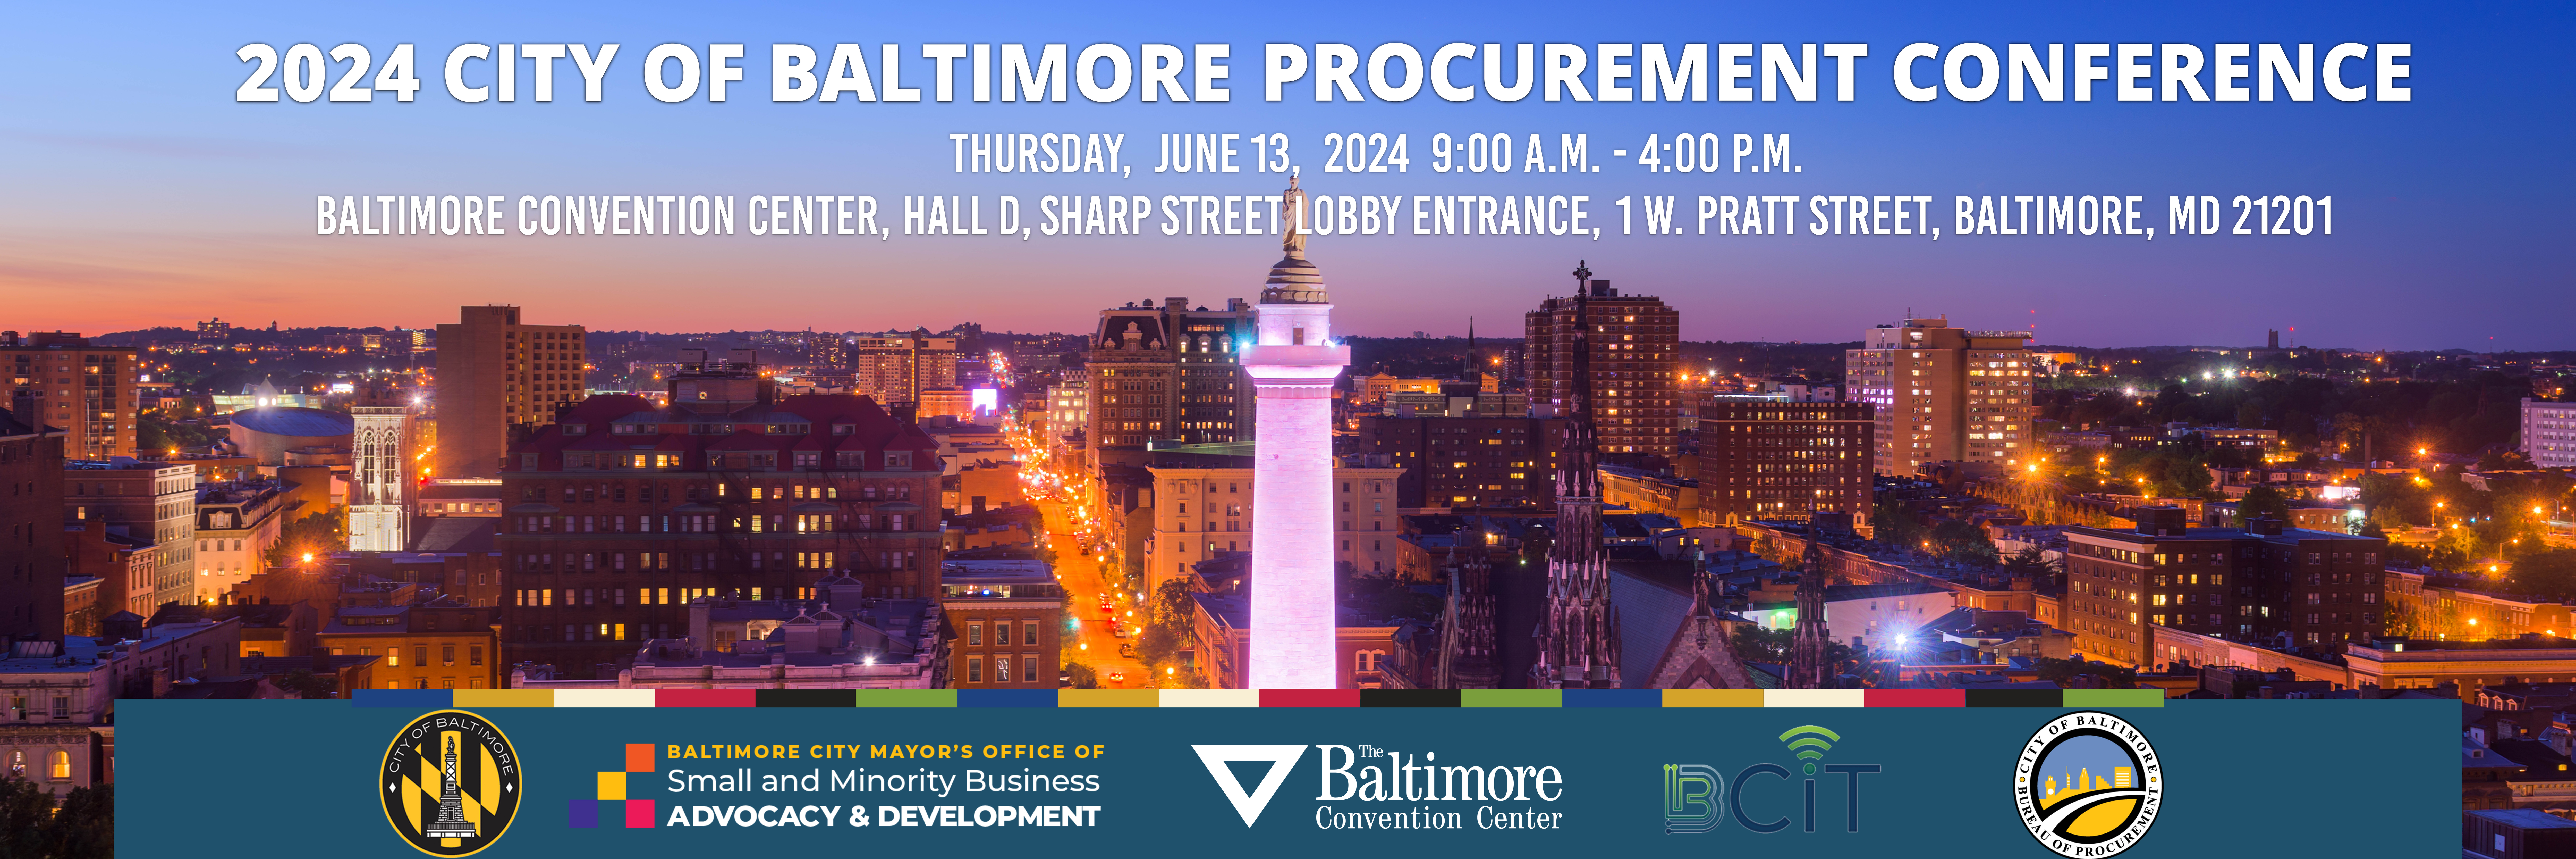 2024 Baltimore Procurement Conference